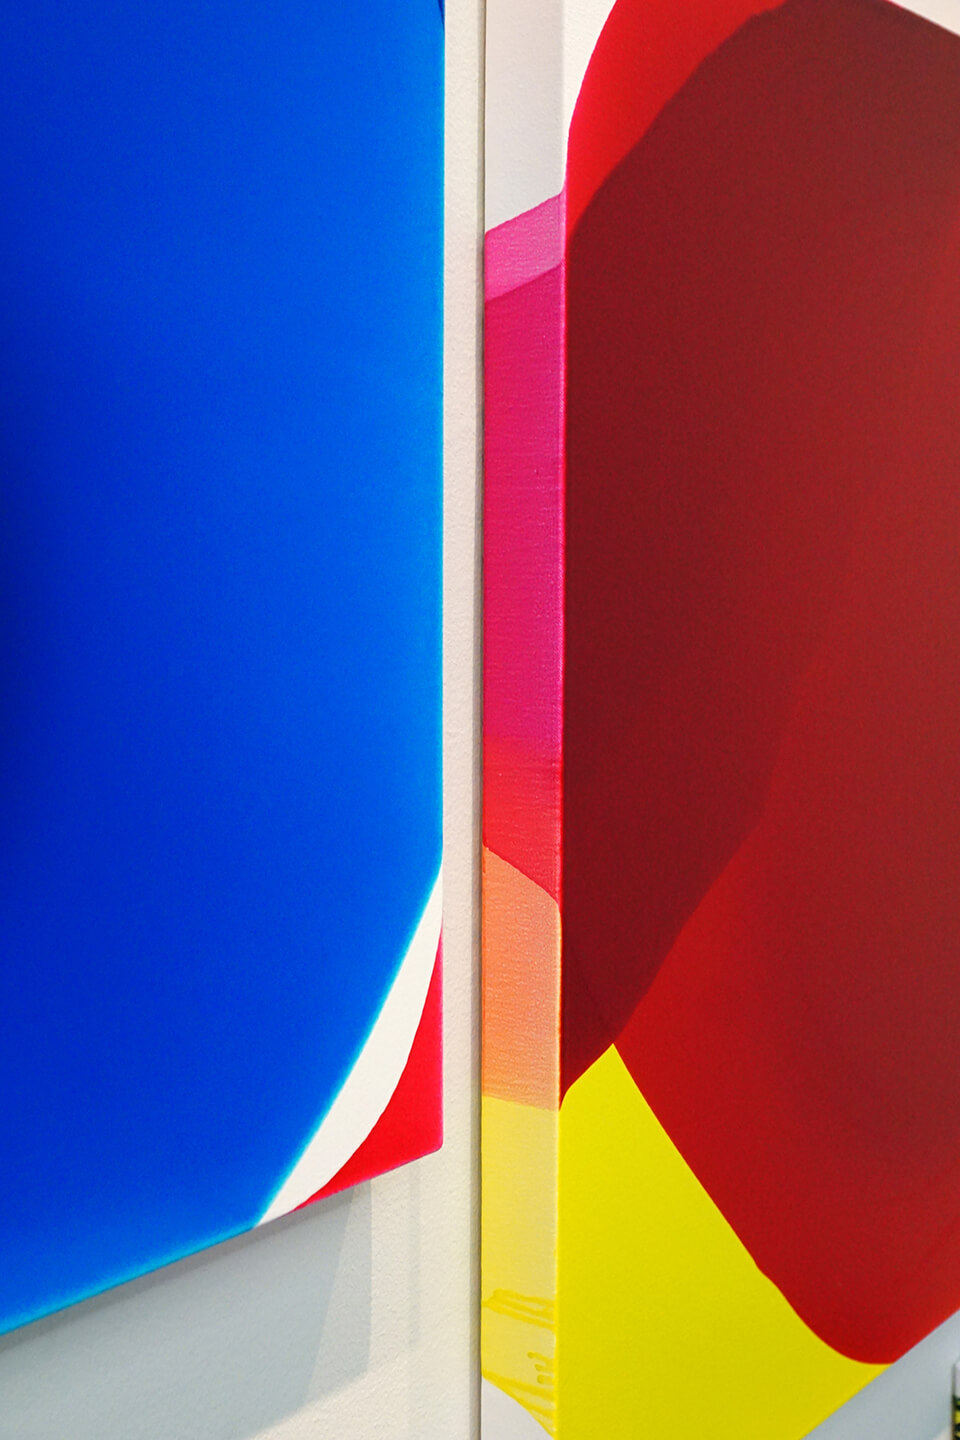 「VOCA展2019」<br />
2019<br />
「luminous dropping」<br />
41×41×4cm～100×100×10cm detail<br />
作品制作：2018<br />
acrylic on canvas<br />
上野の森美術館/東京